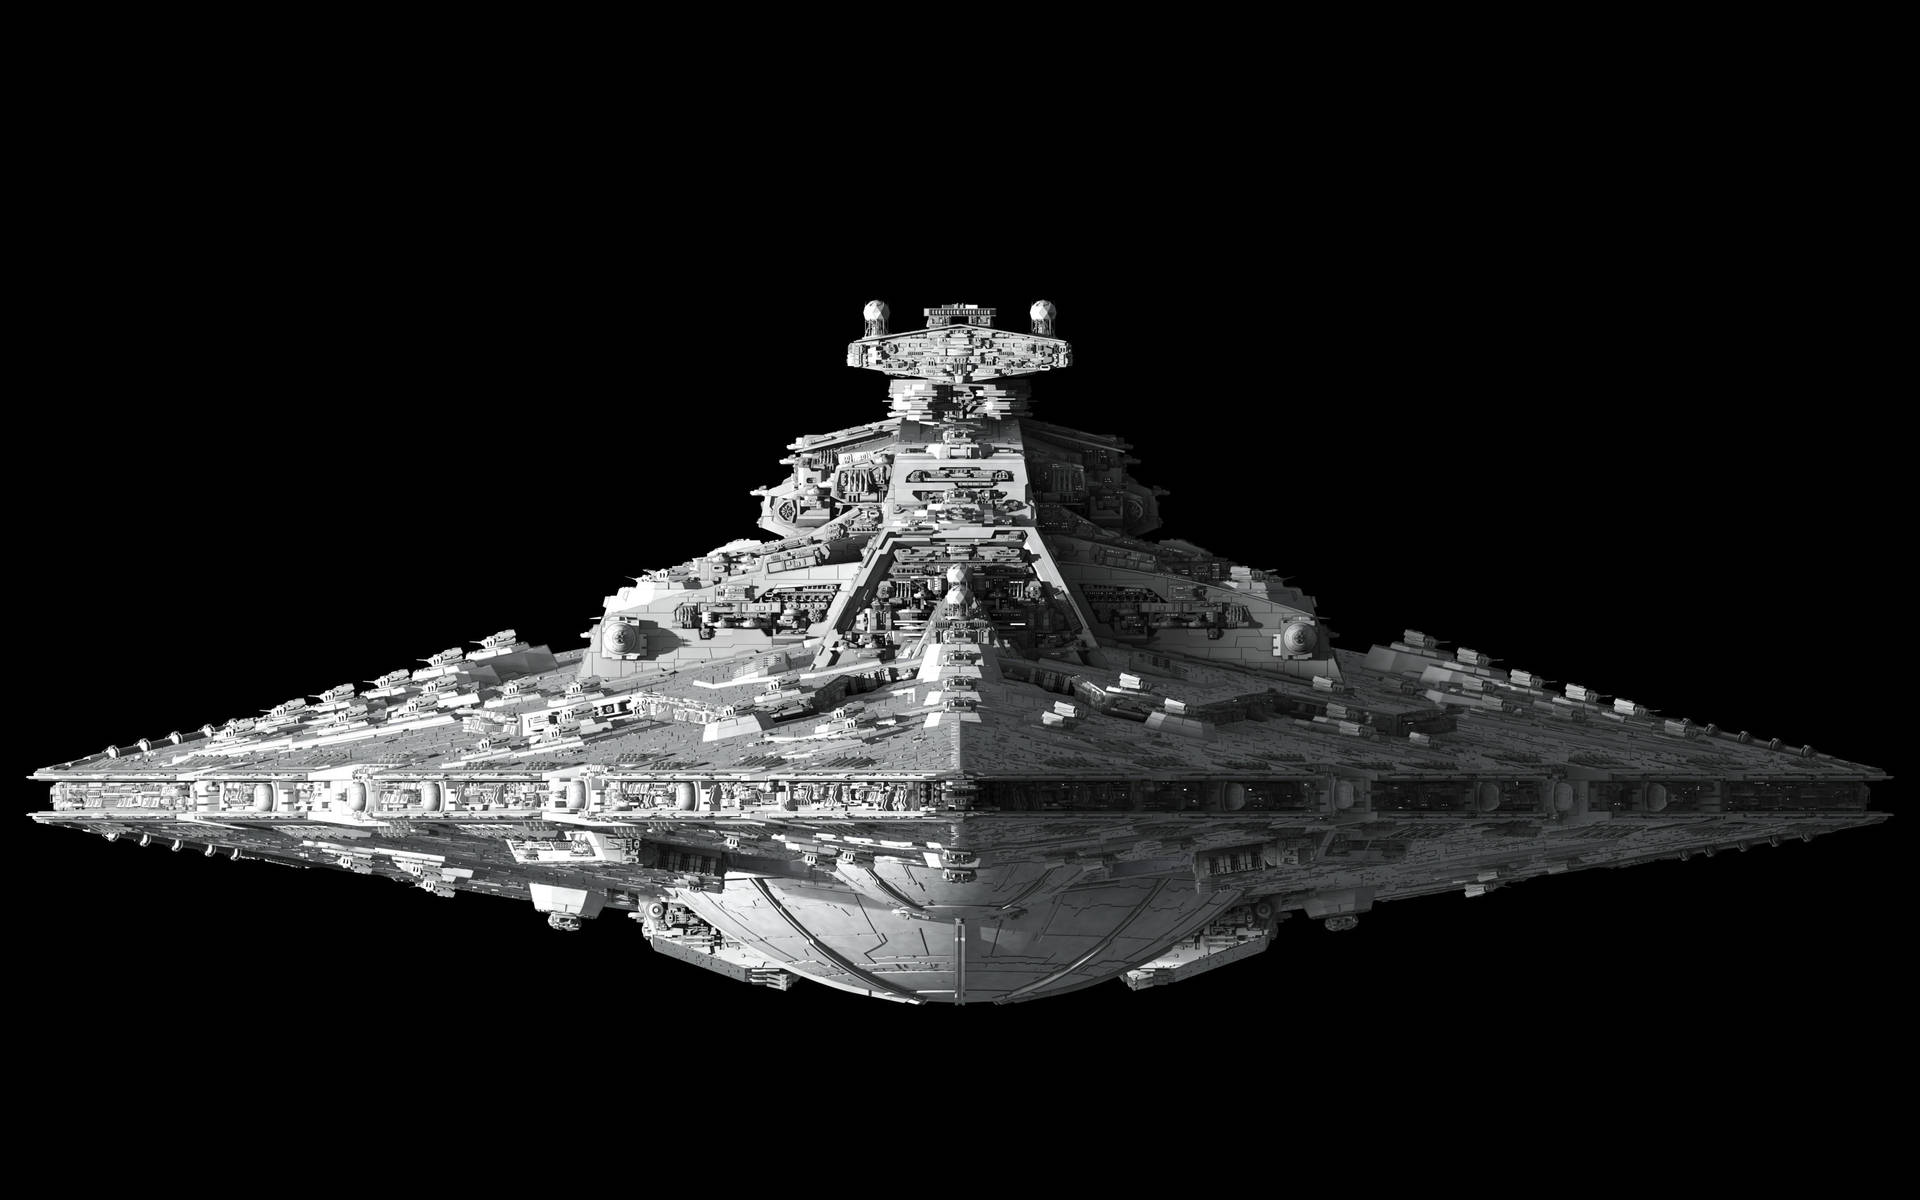 4k Star Wars Imperial Star Destroyer